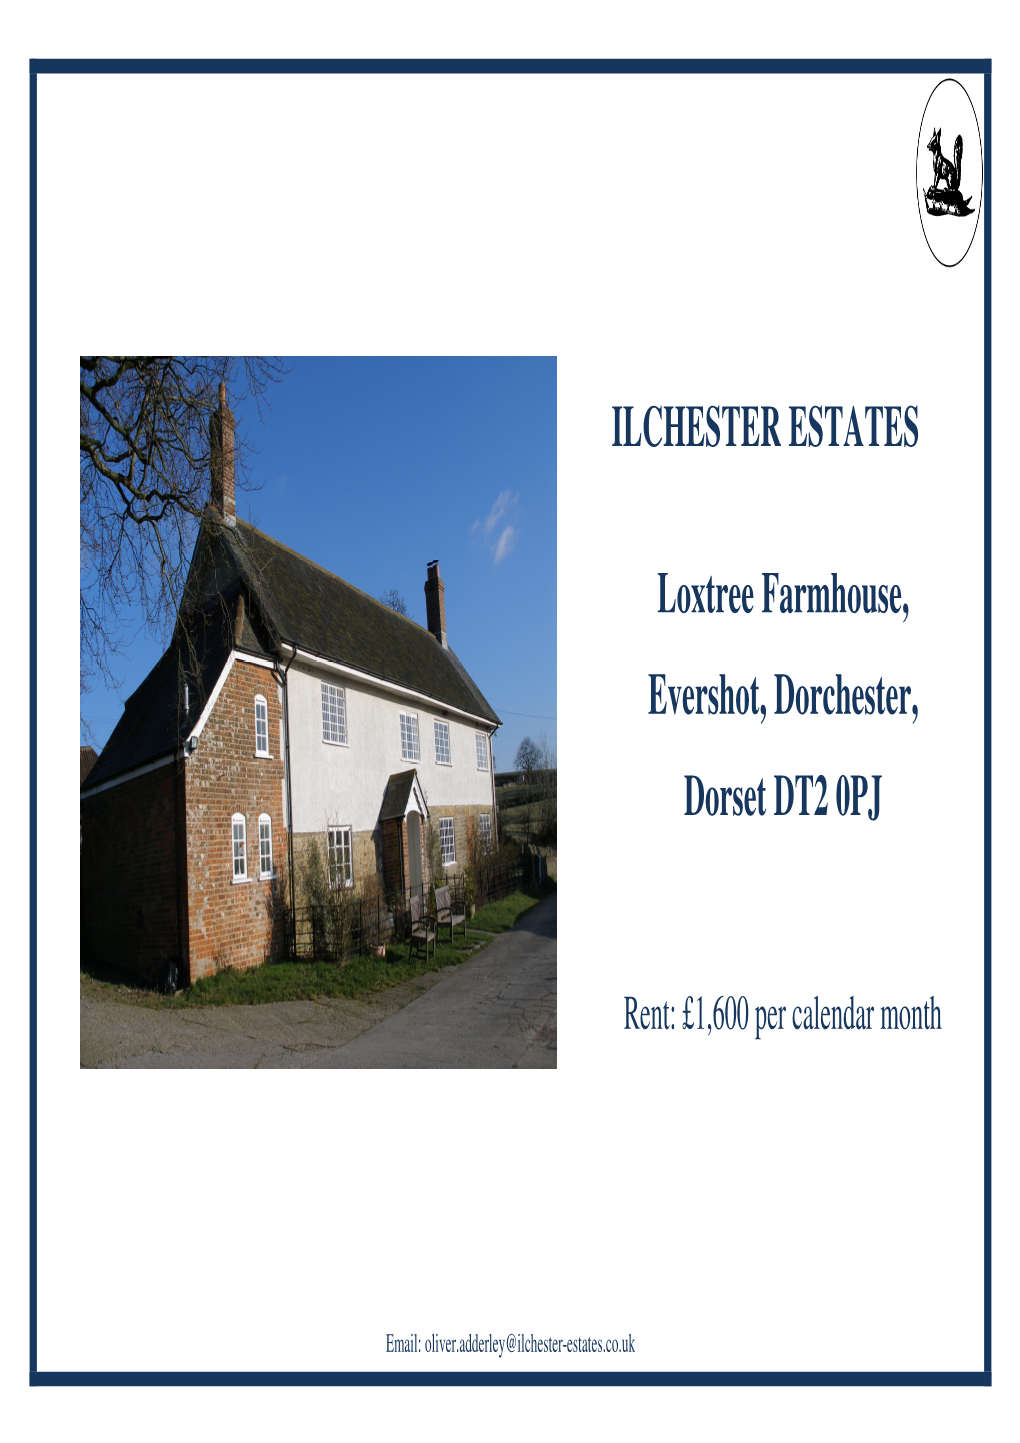 ILCHESTER ESTATES Loxtree Farmhouse, Evershot, Dorchester